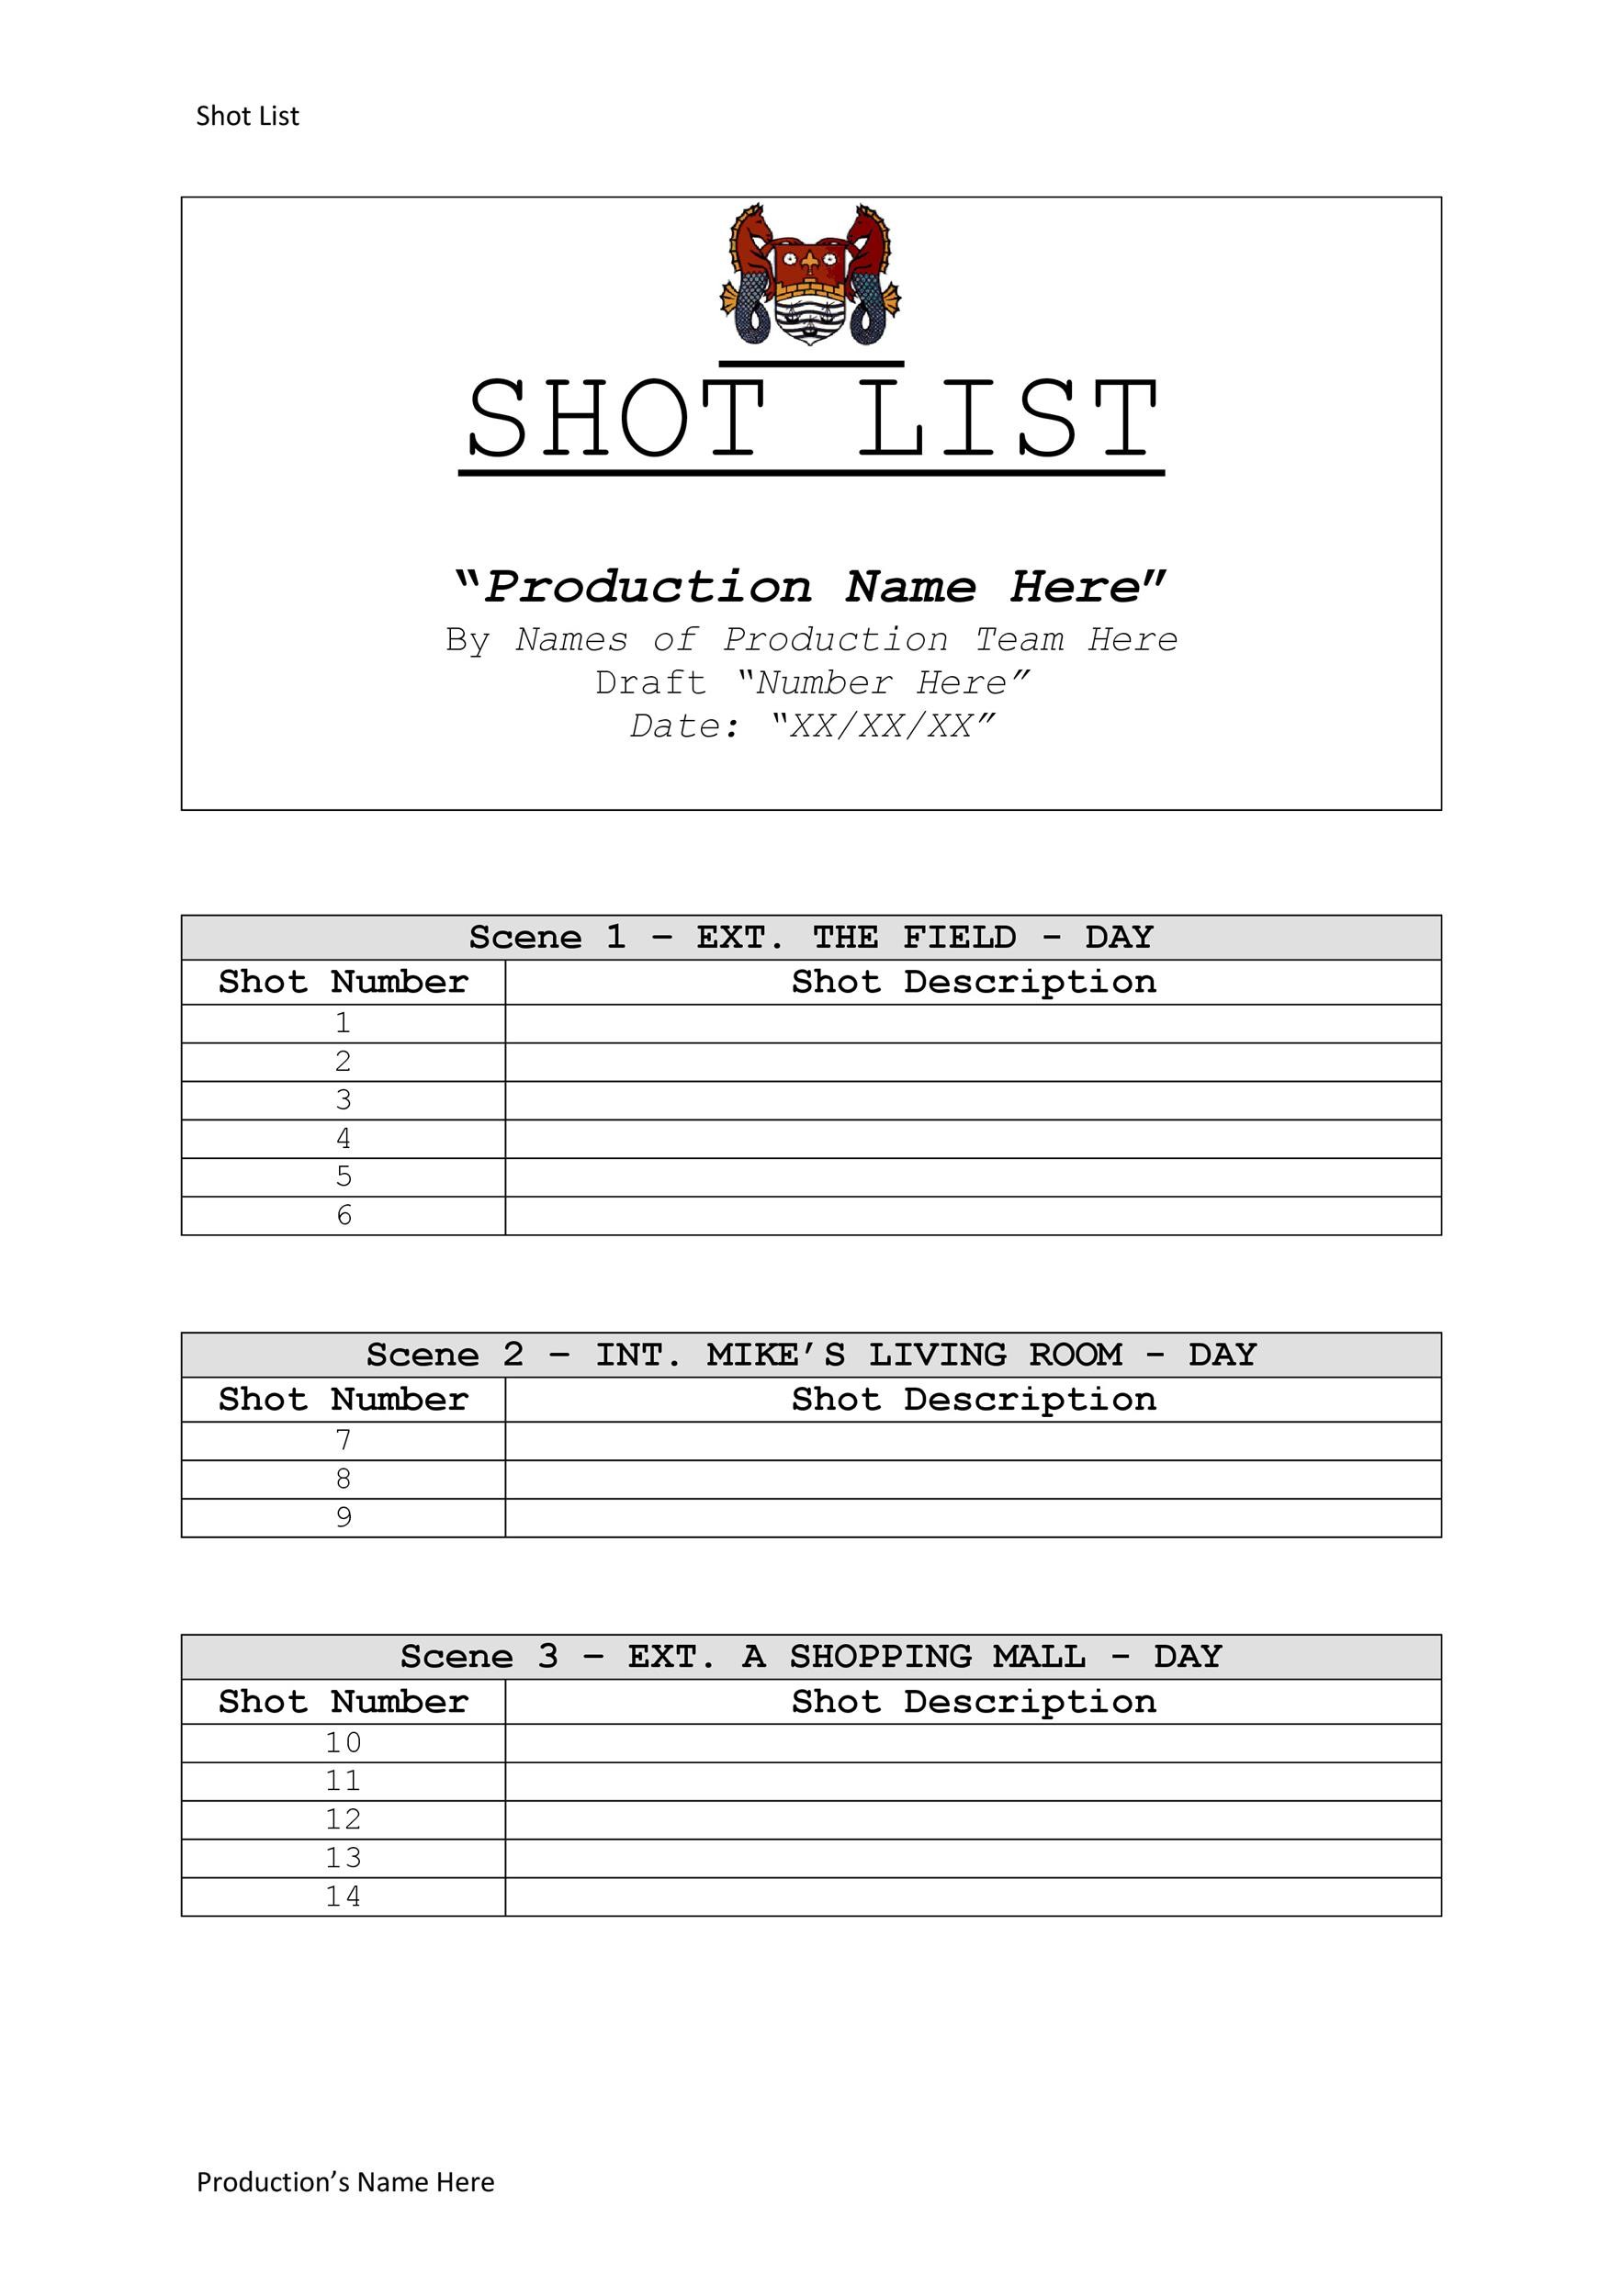 Free shot list template 27